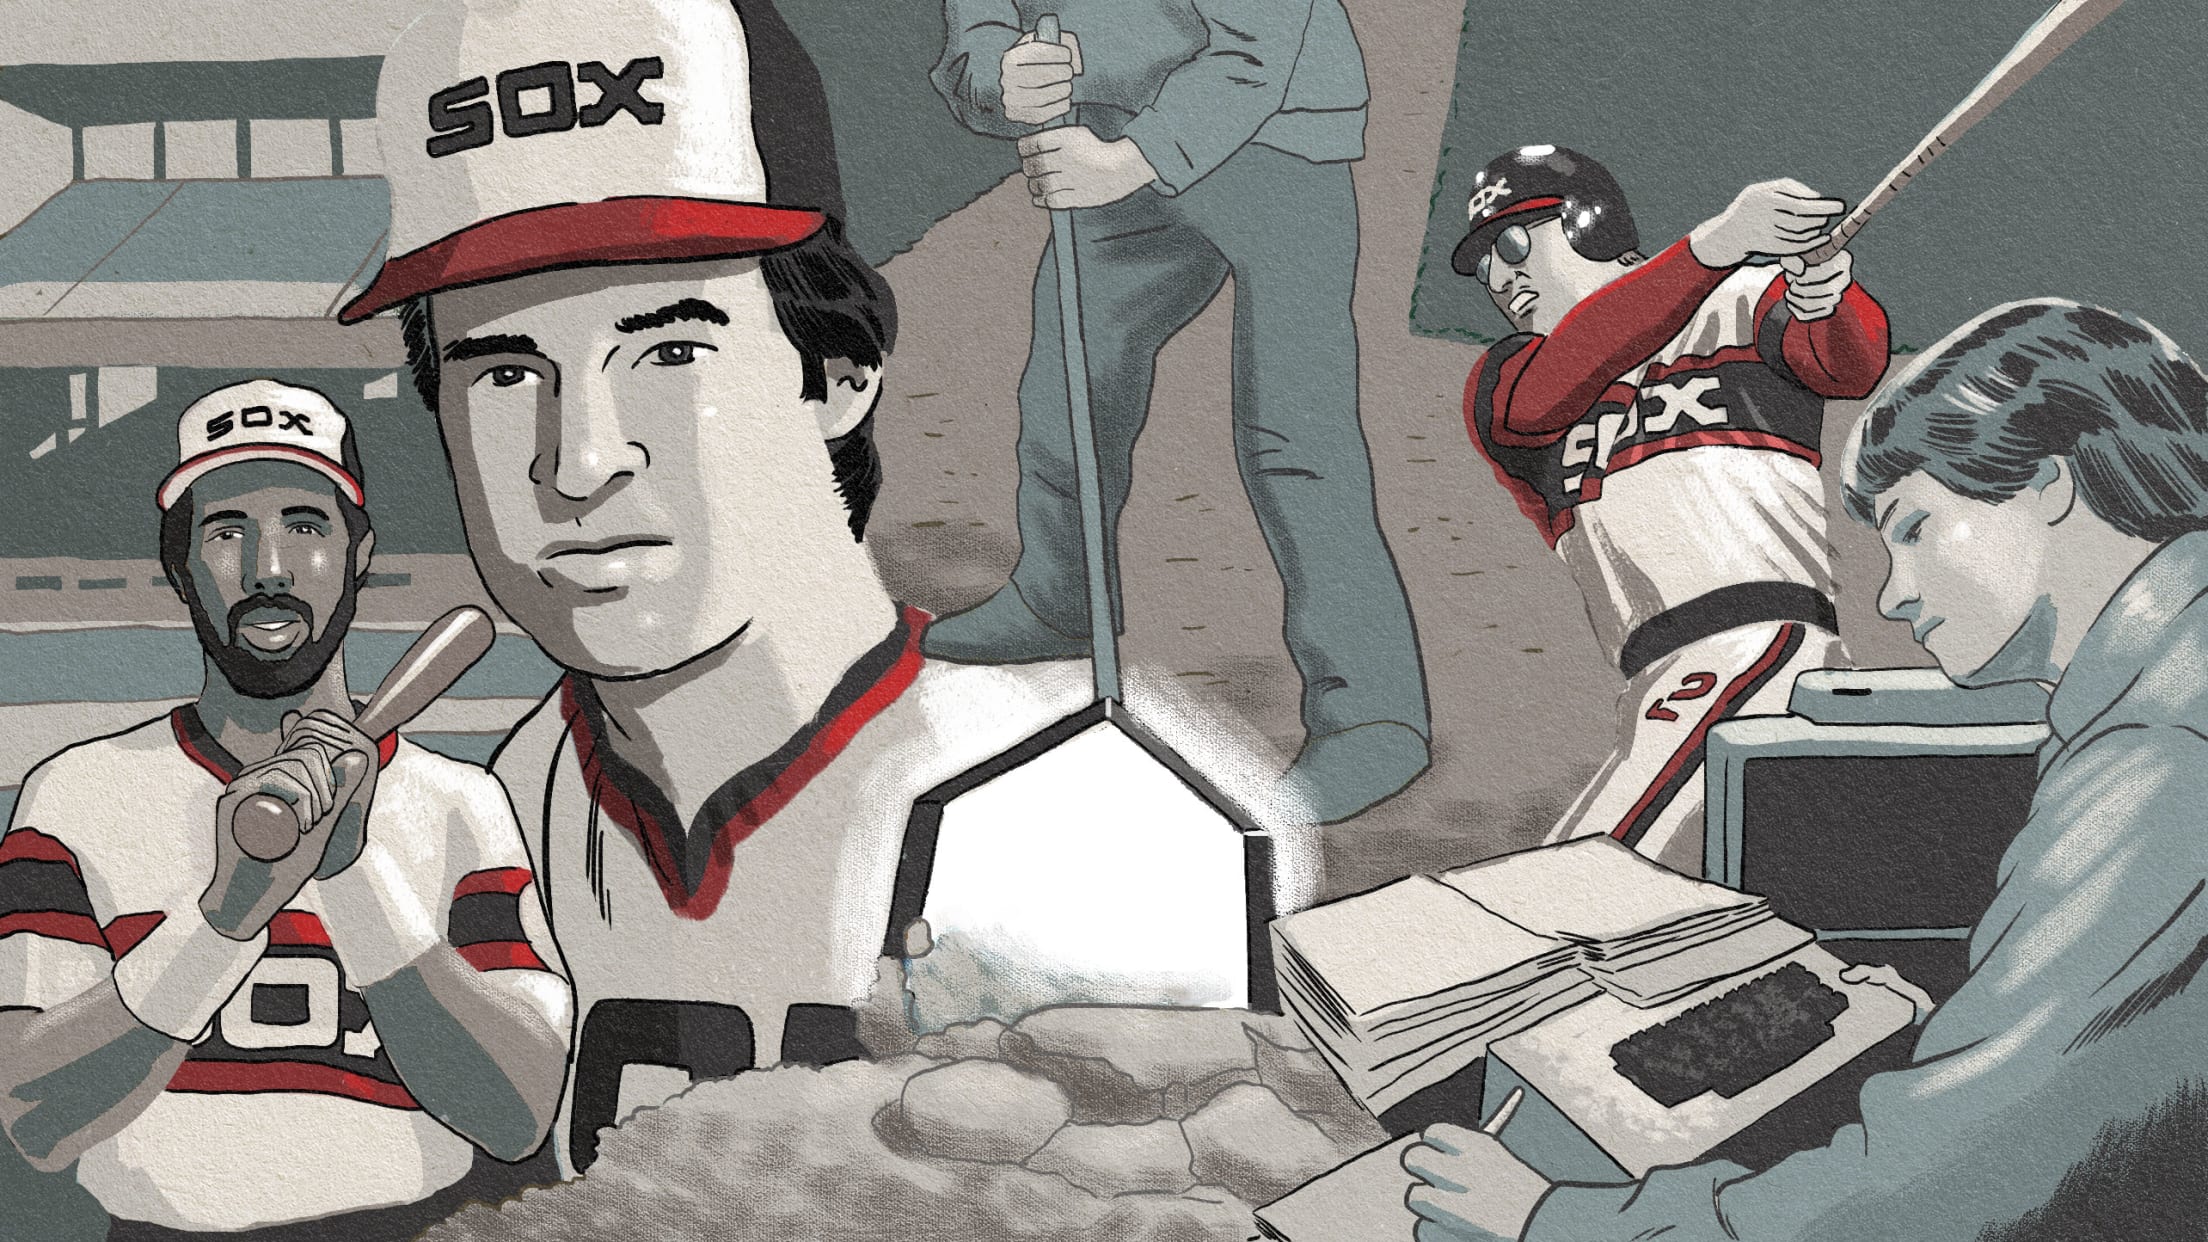 1985 Tony LaRussa Game-Worn White Sox Jersey